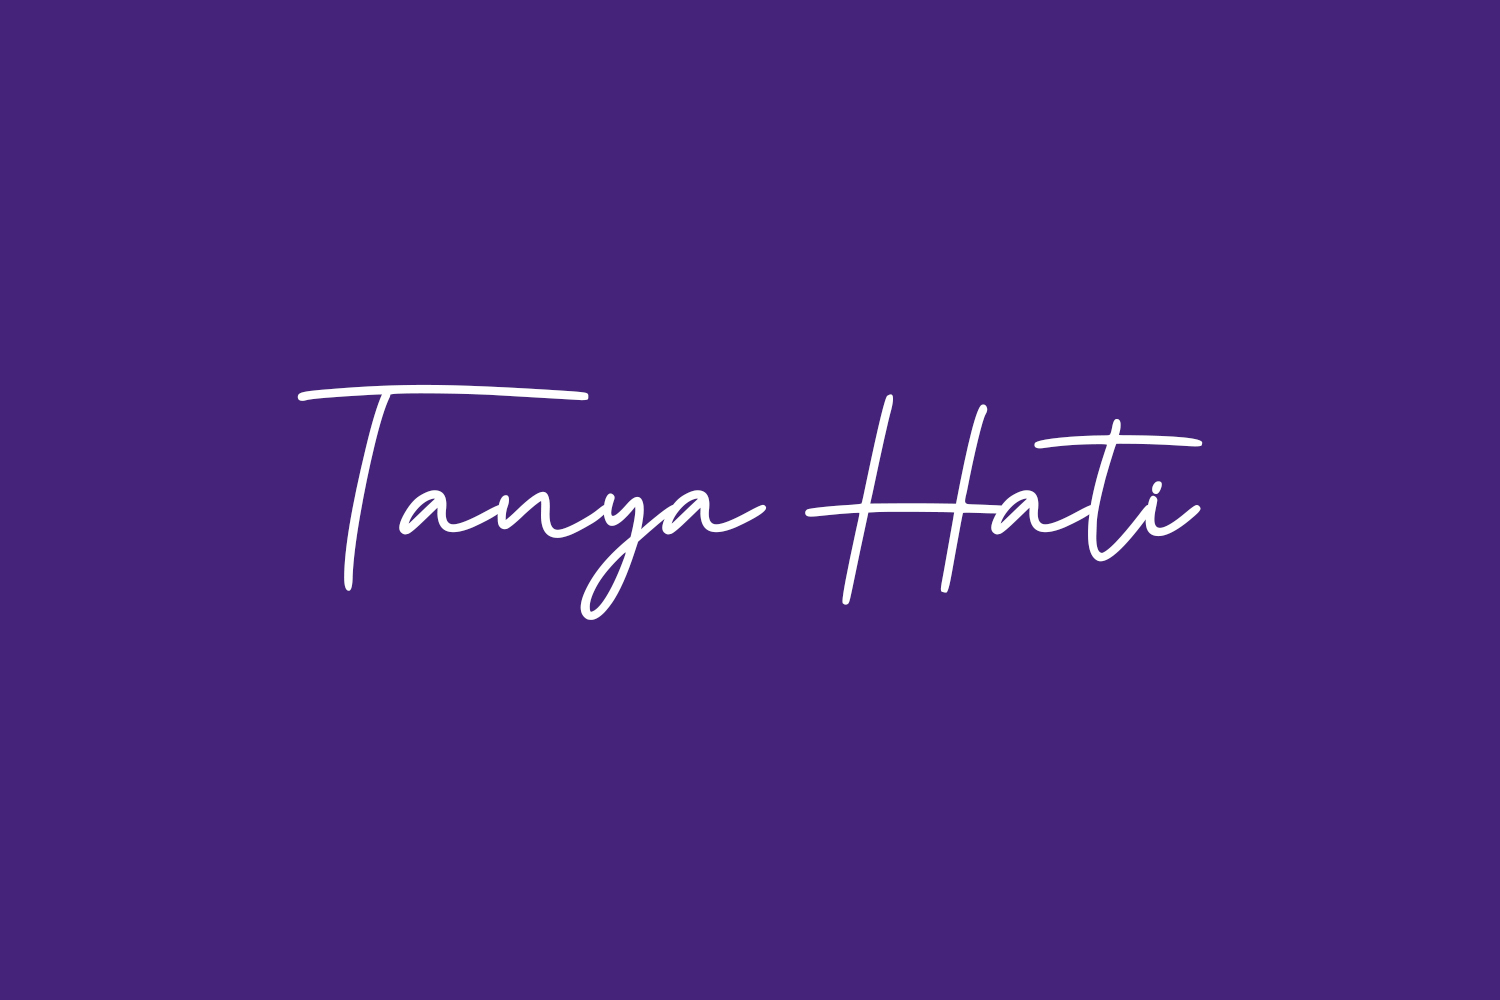 Tanya Hati Free Font